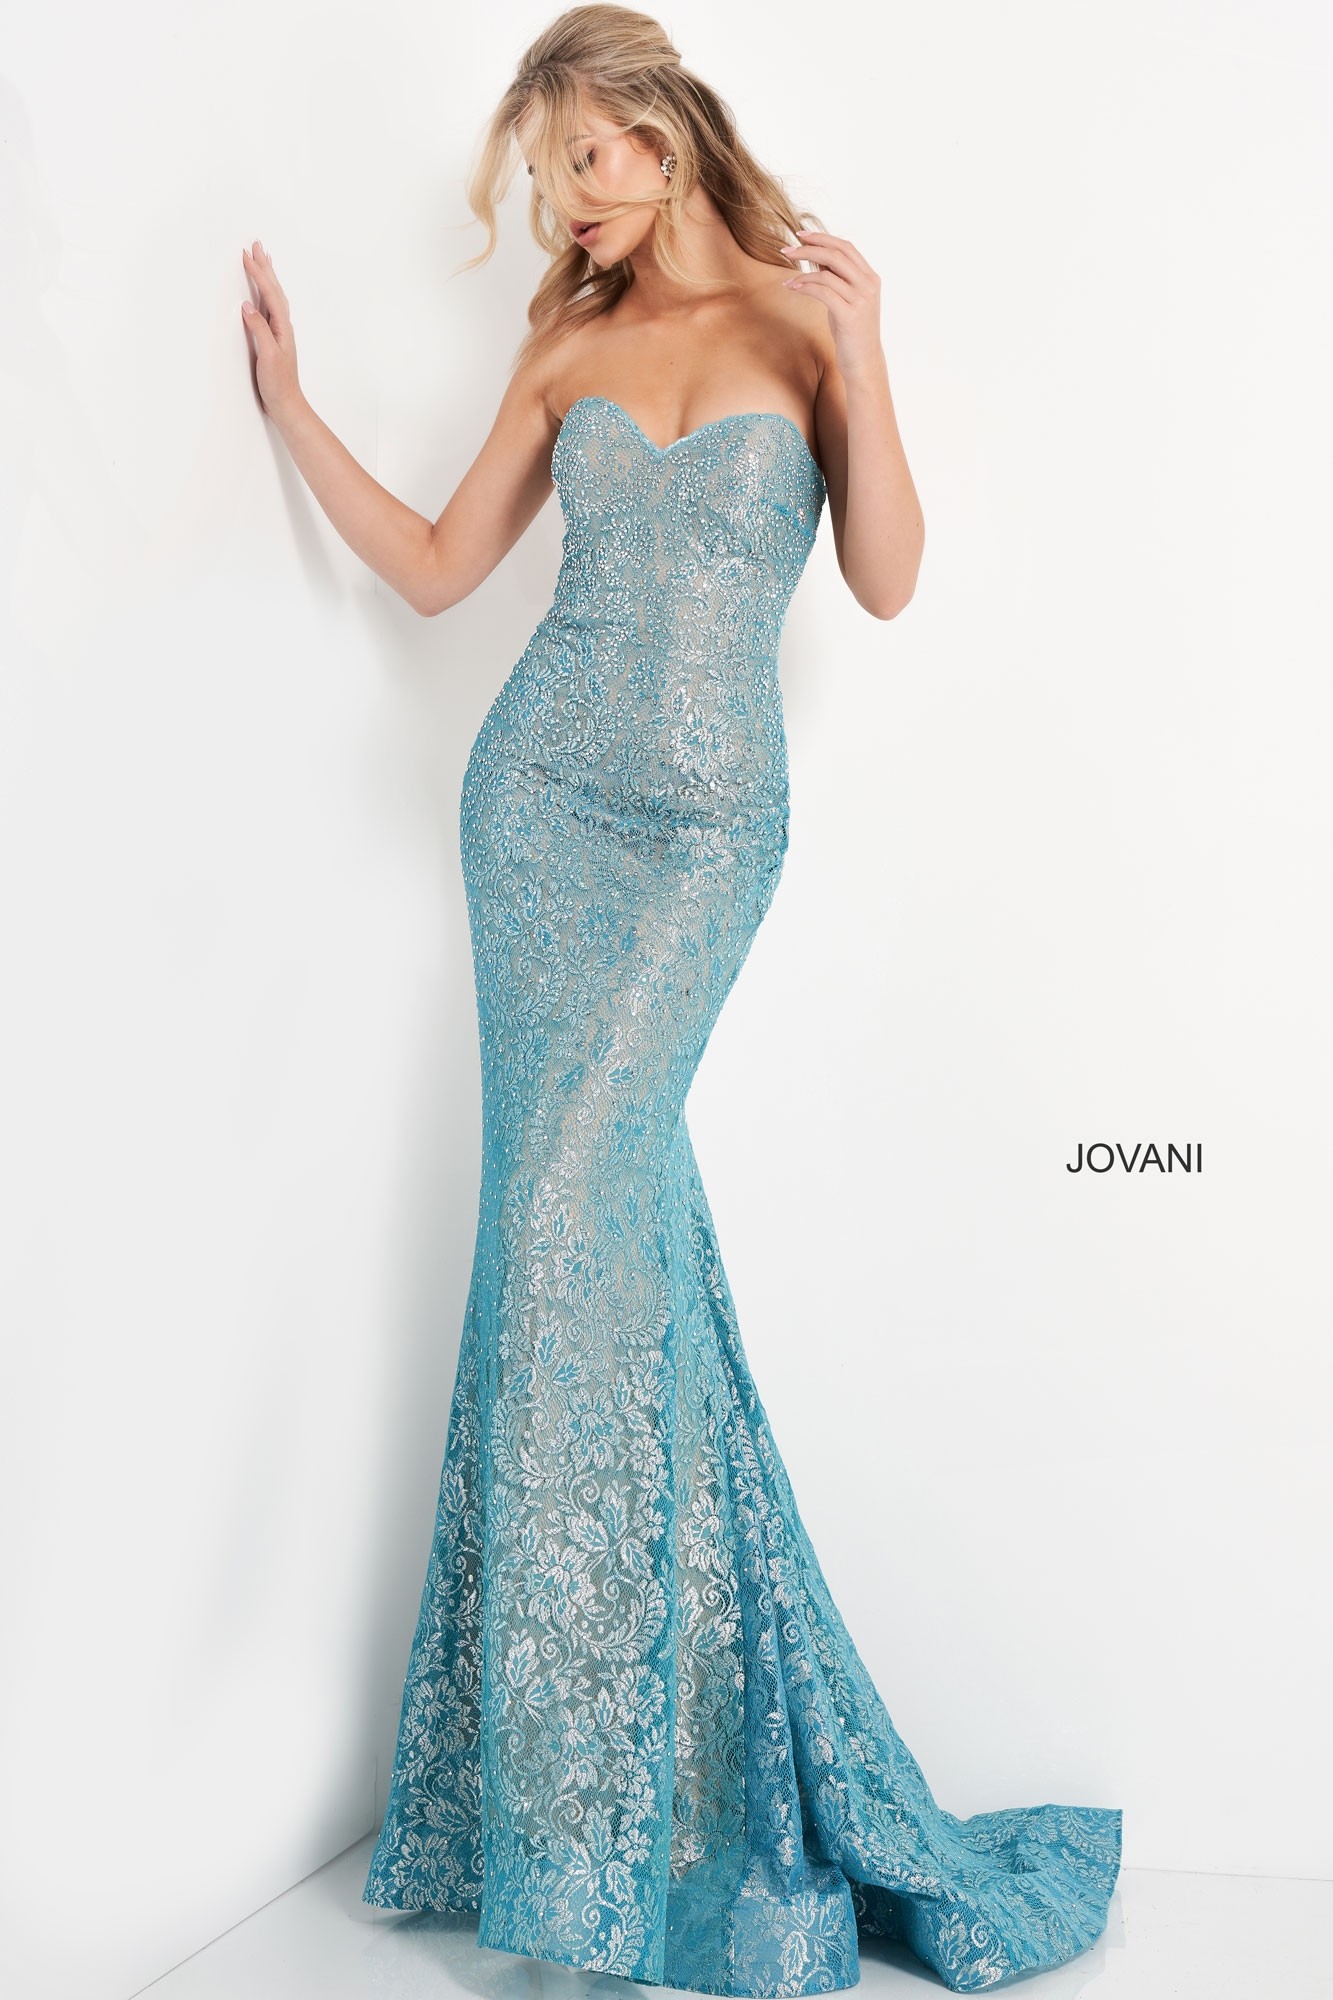 Jovani 06586 Strapless Lace Prom Dress